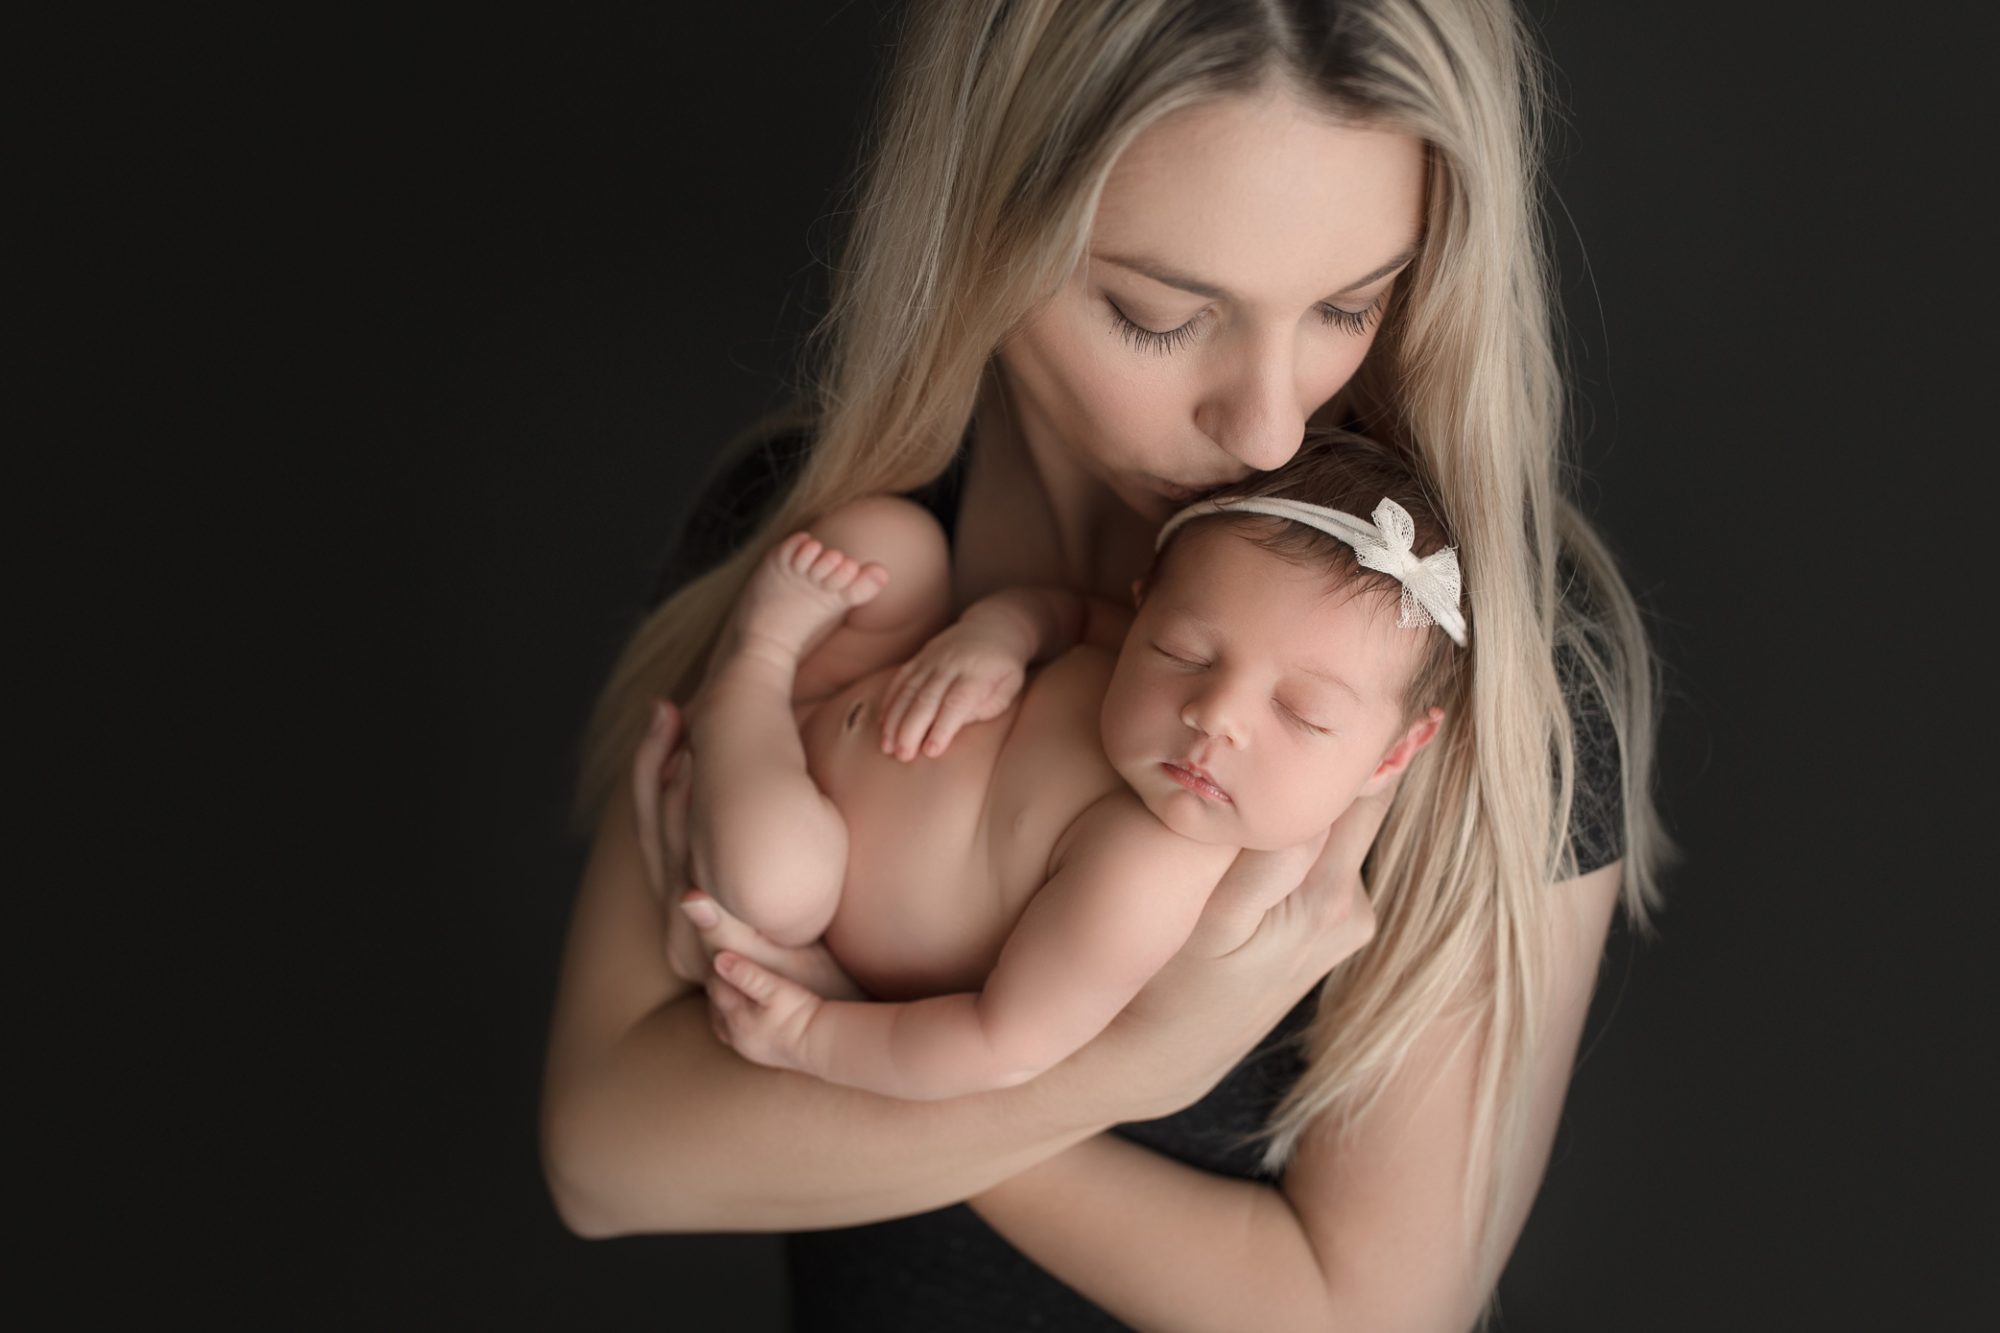 newborn photography seattle | seattle newborn baby photographer 